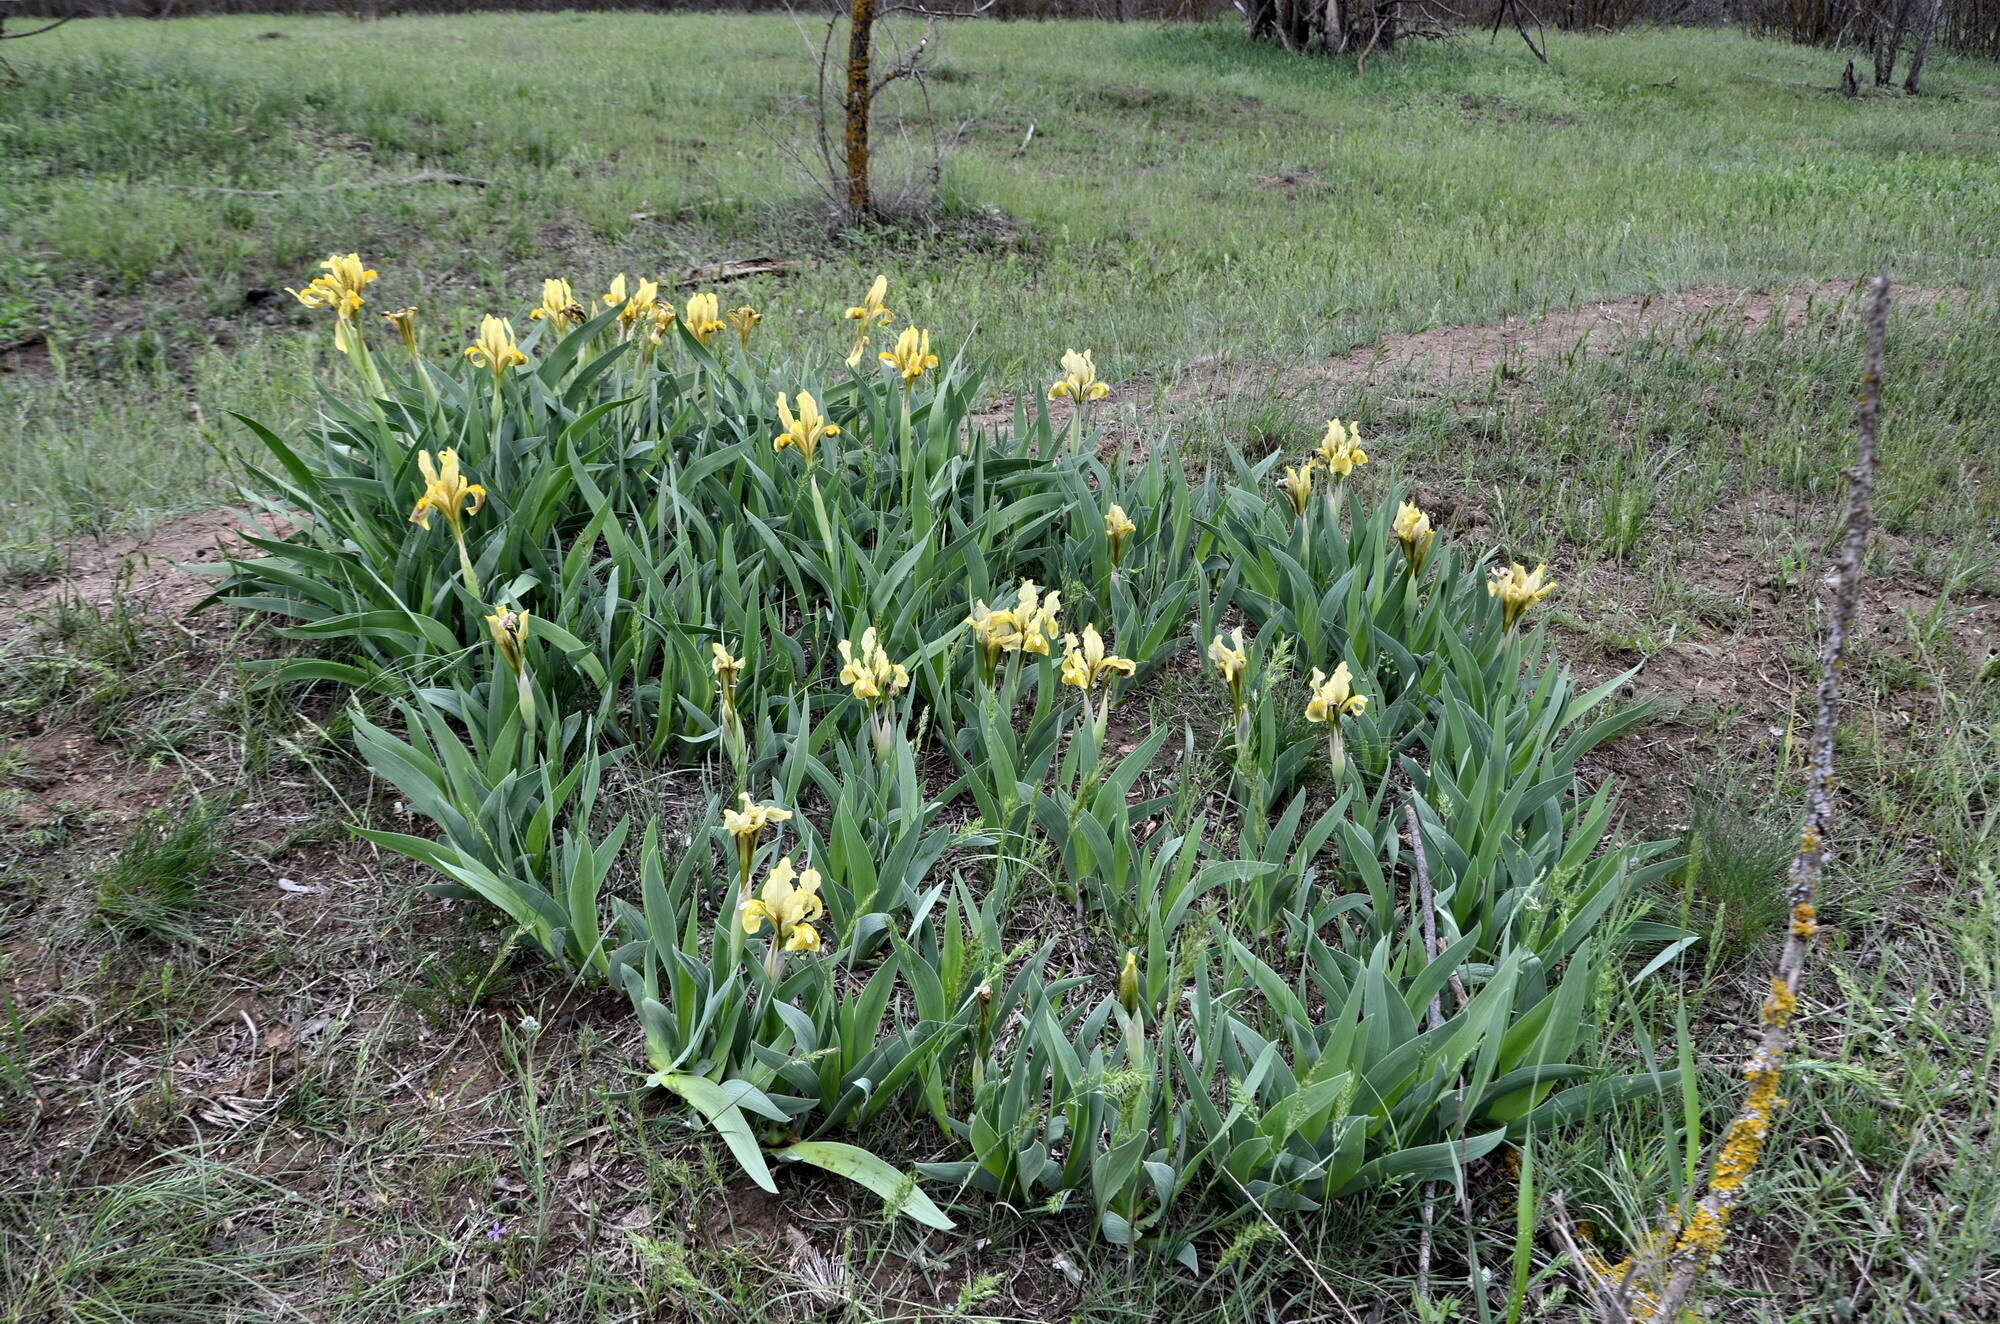 Image of Iris scariosa Willd. ex Link